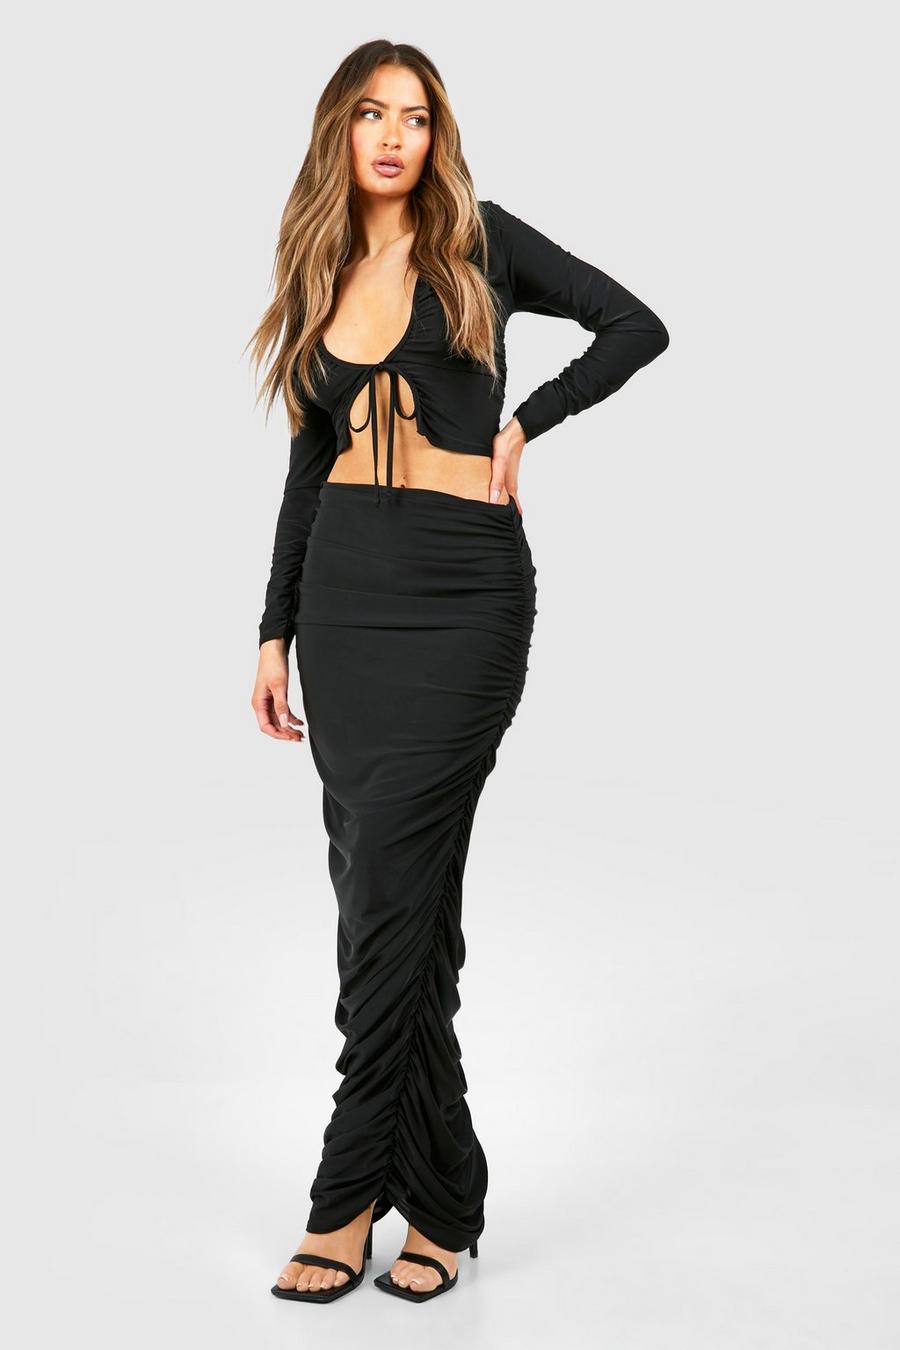 Black Slinky Tie Front Ruched Long Sleeve Top & Midi Skirt